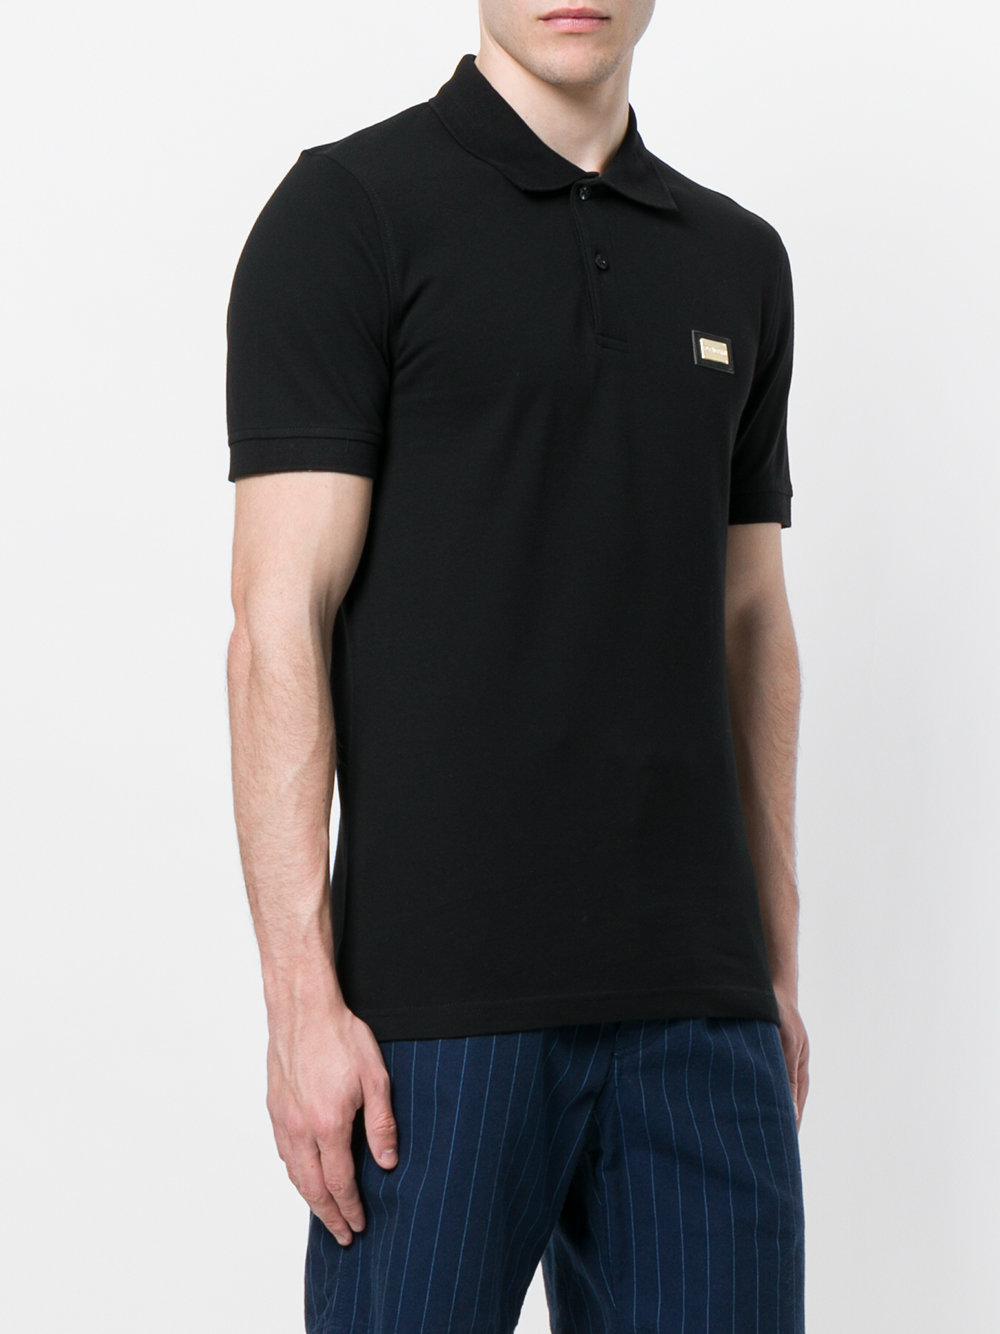 moschino black polo shirt